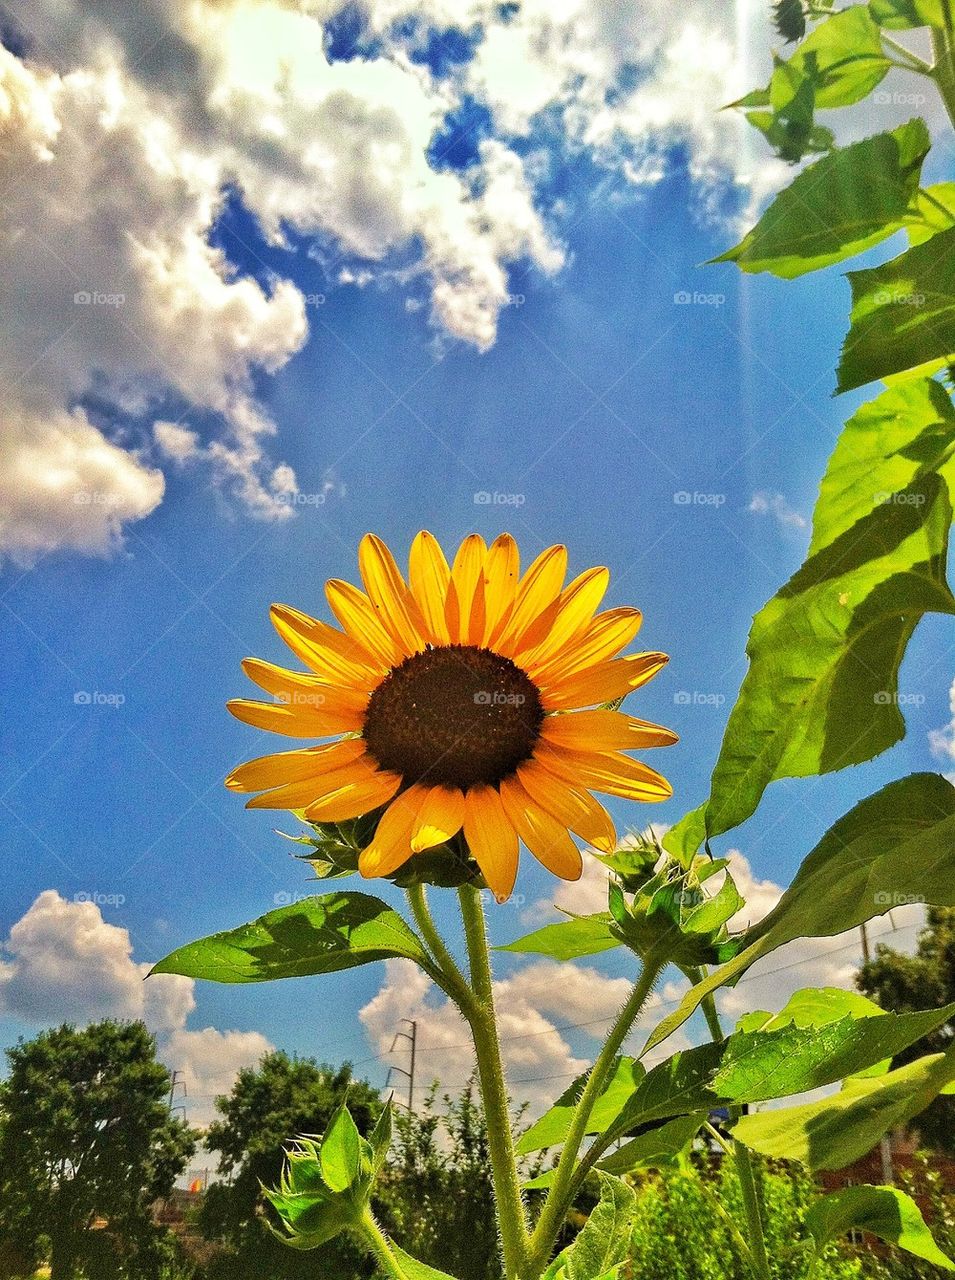 Sunlight on sunflower